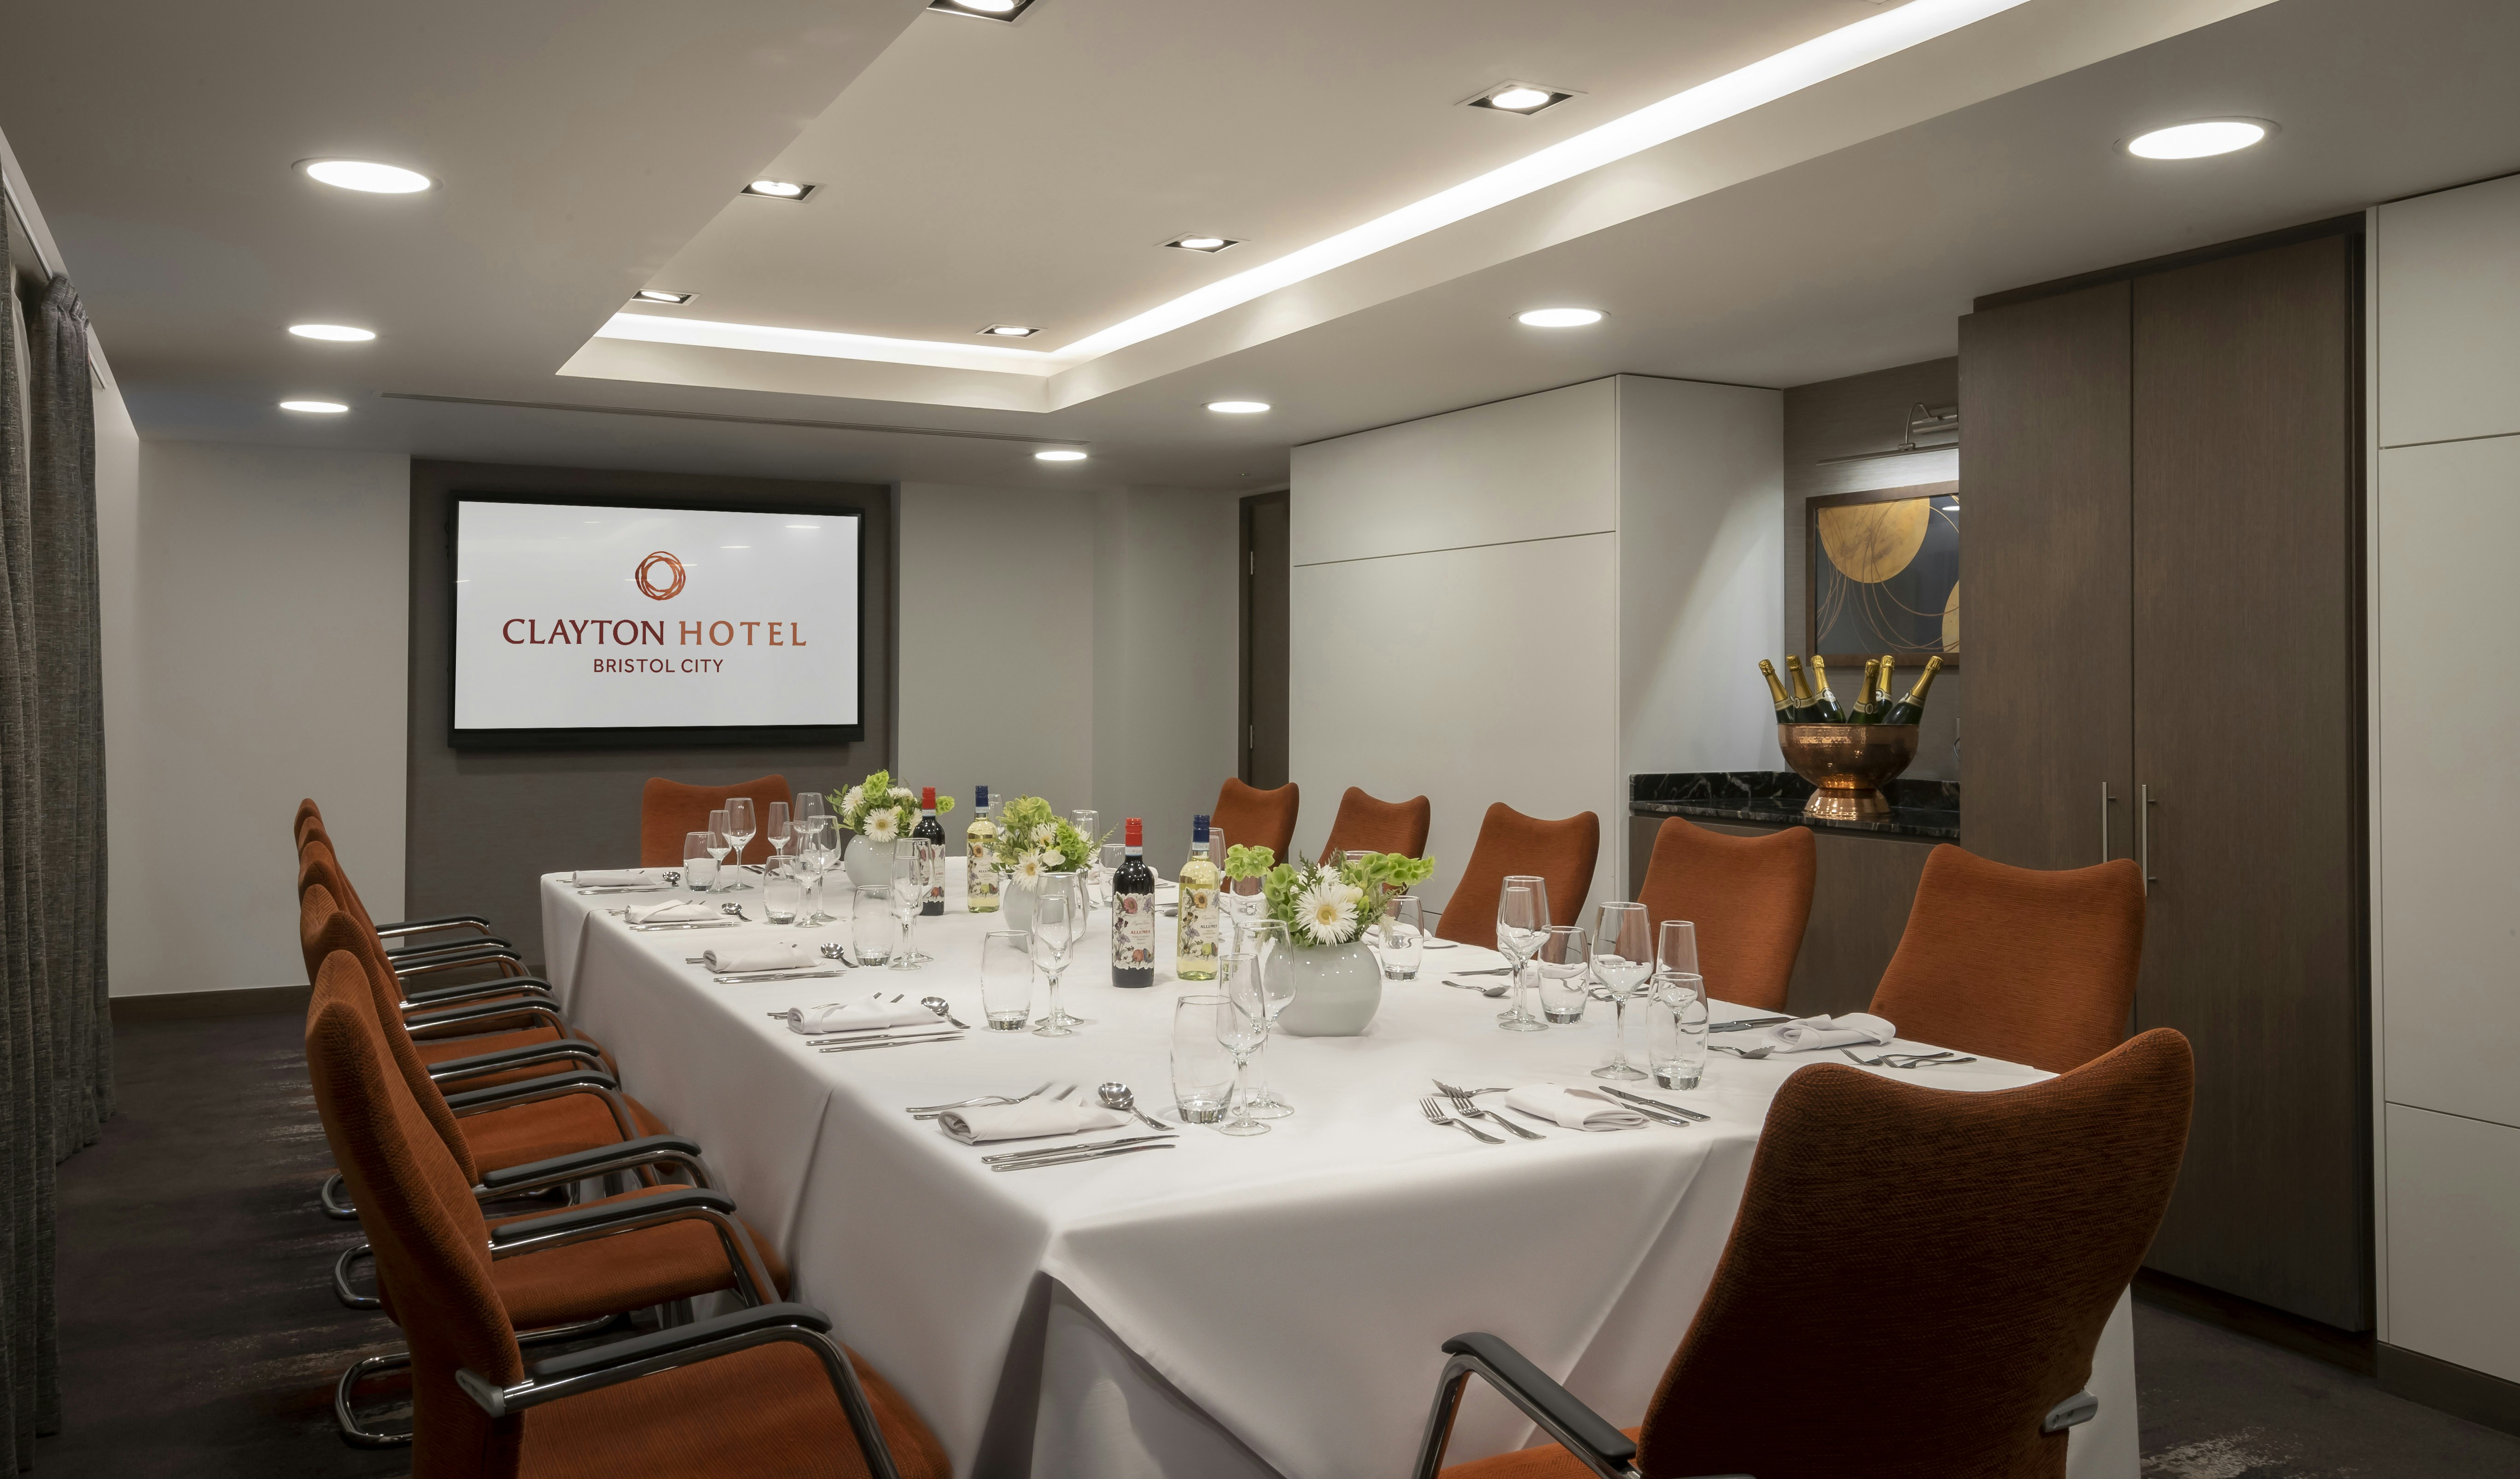 Private Dining Rooms Venues in Bristol - Clayton Hotel Bristol City